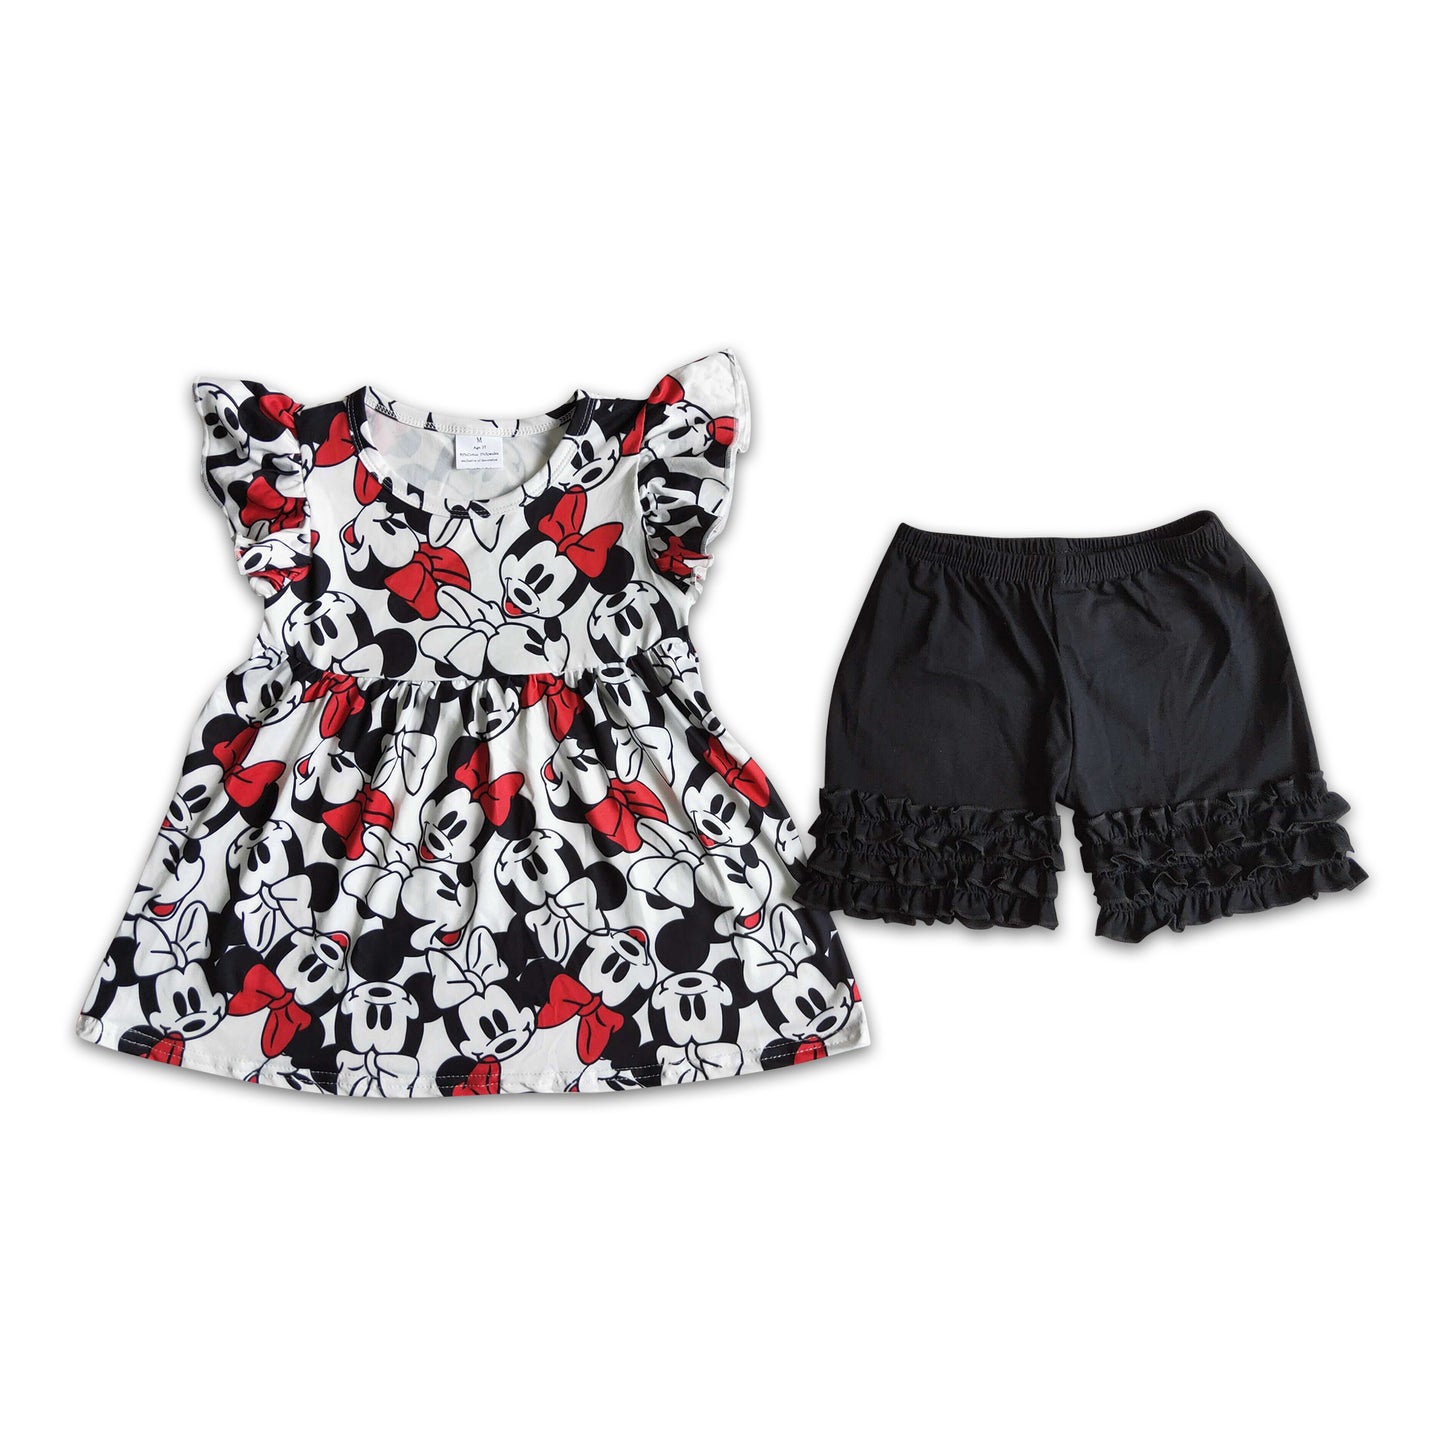 Flutter sleeve mouse tunic black ruffle shorts girls boutique clothing